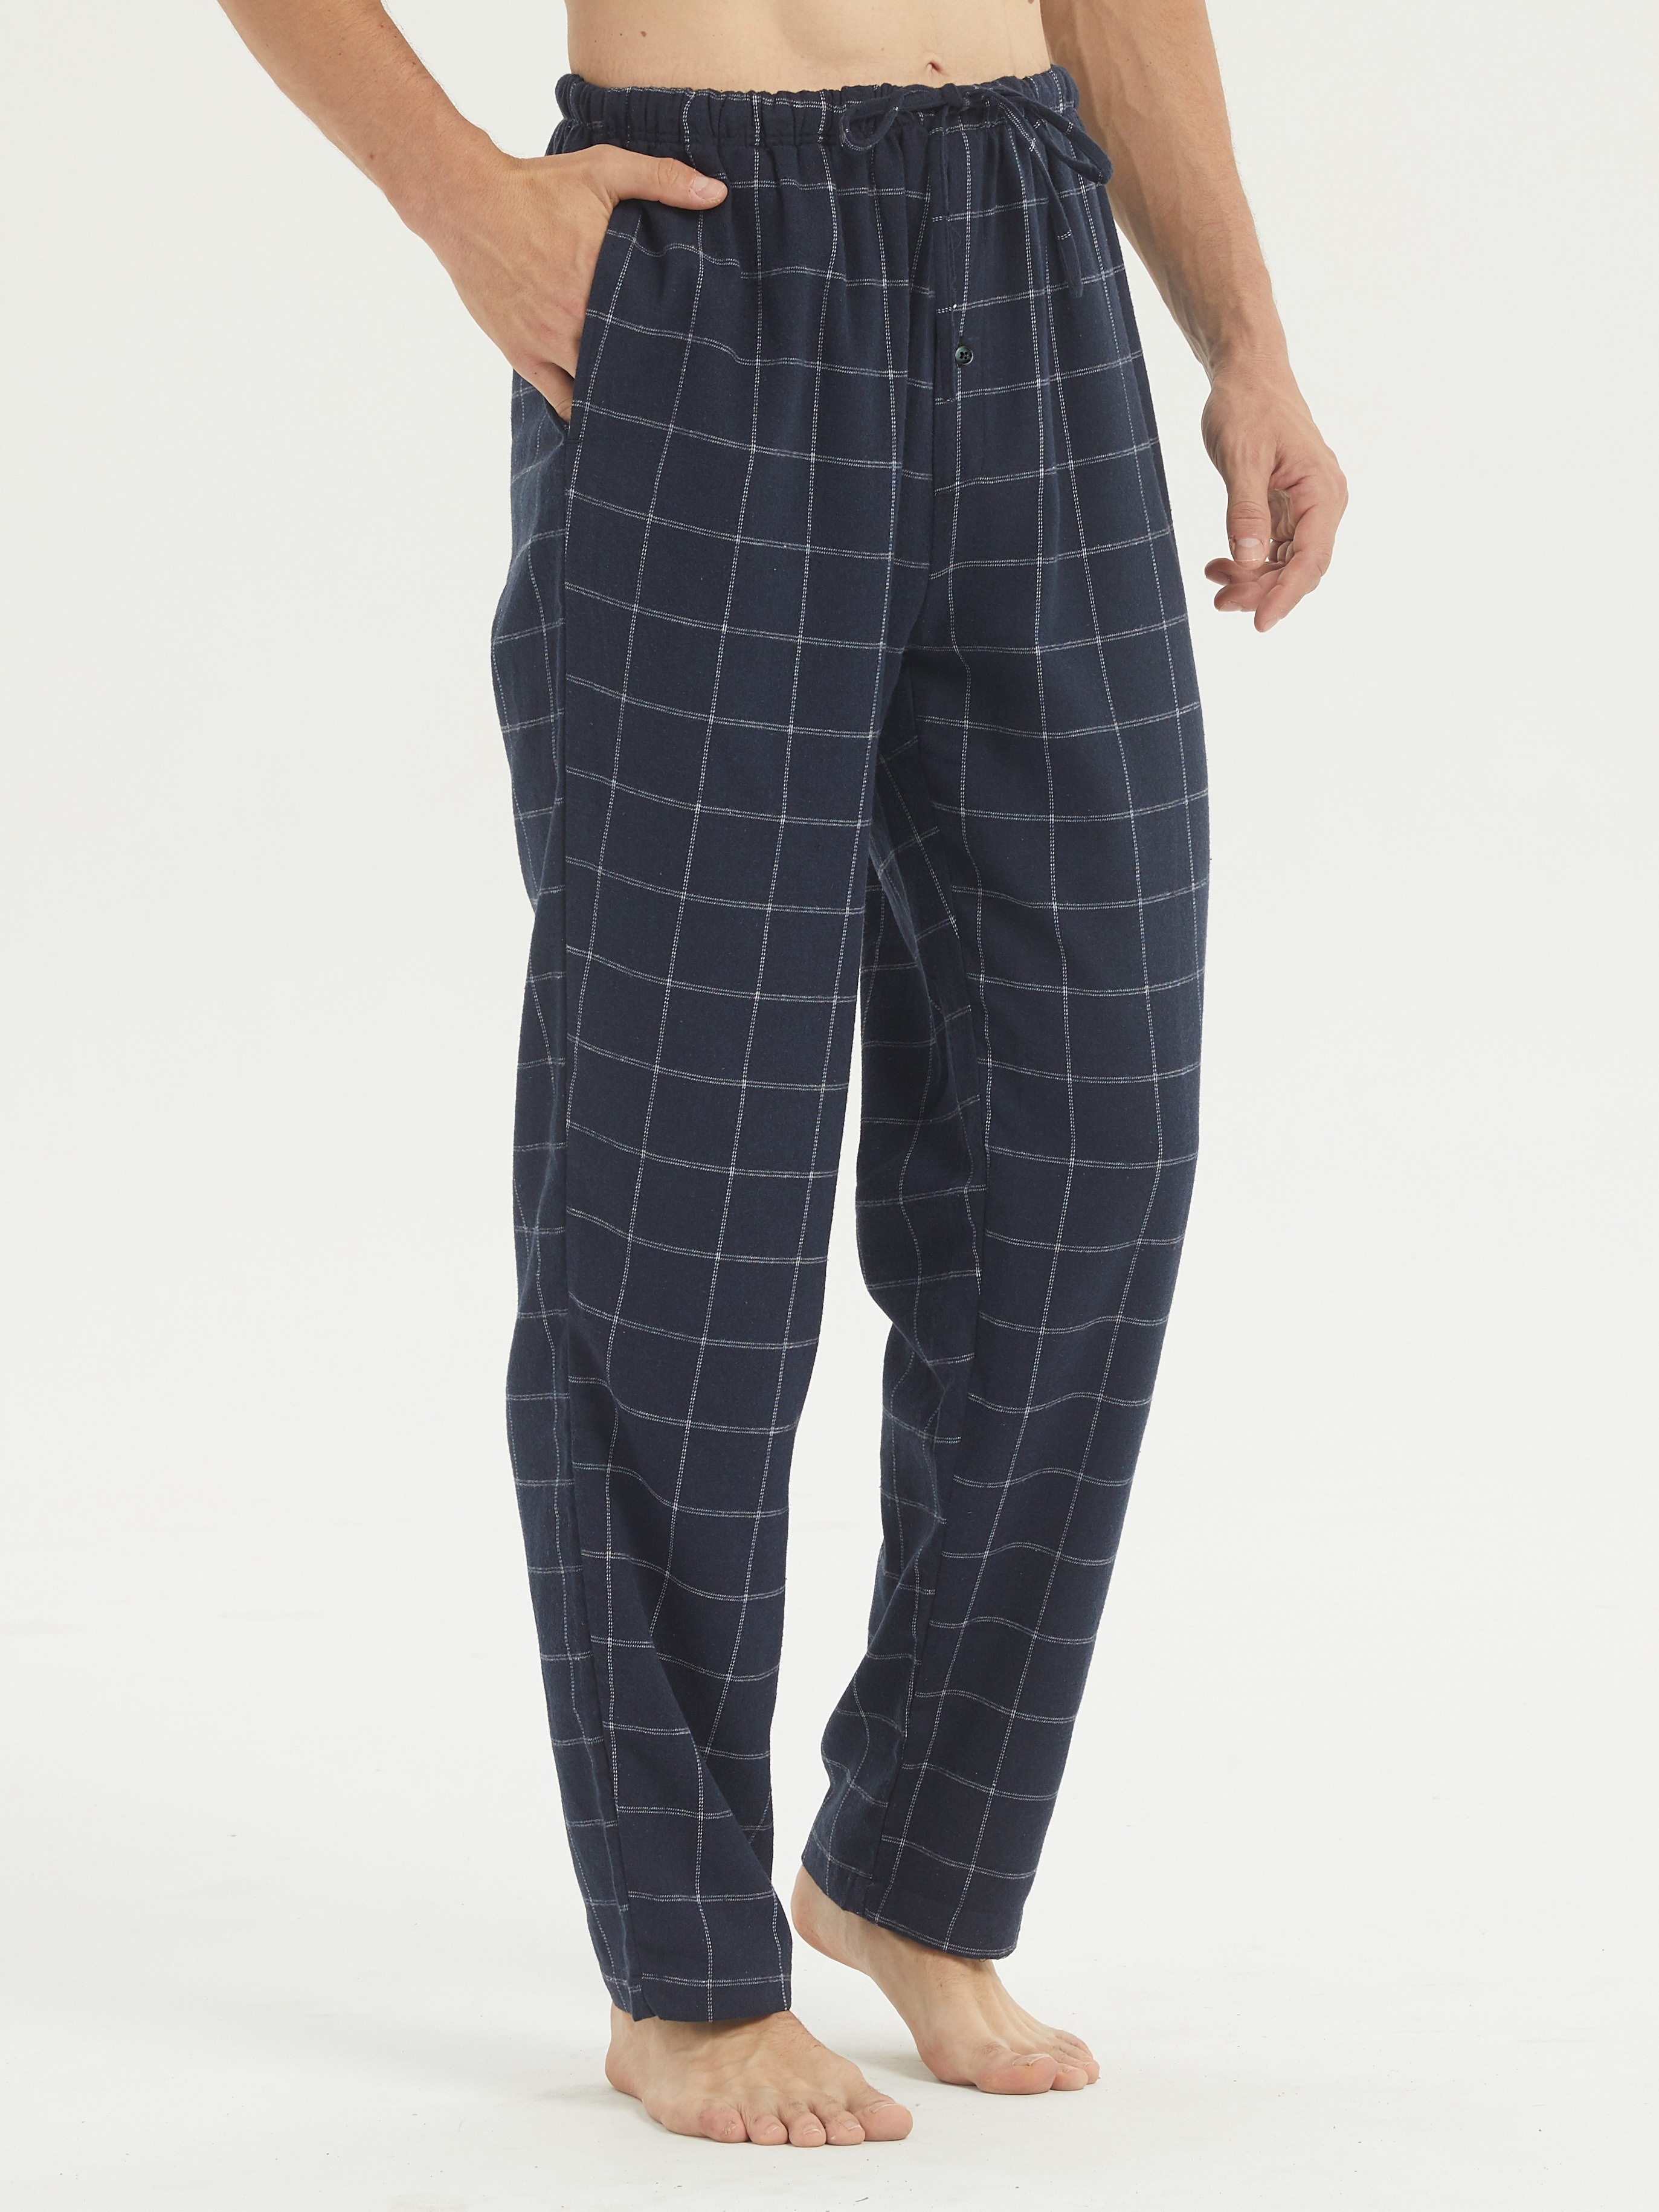 LANBAOSI 2 Pack Women Flannel Pajama Pants With Pockets Female Cotton Plaid Pajamas  Bottoms Comfy Drawstring Lounge Trousers Sleepwear Size L 